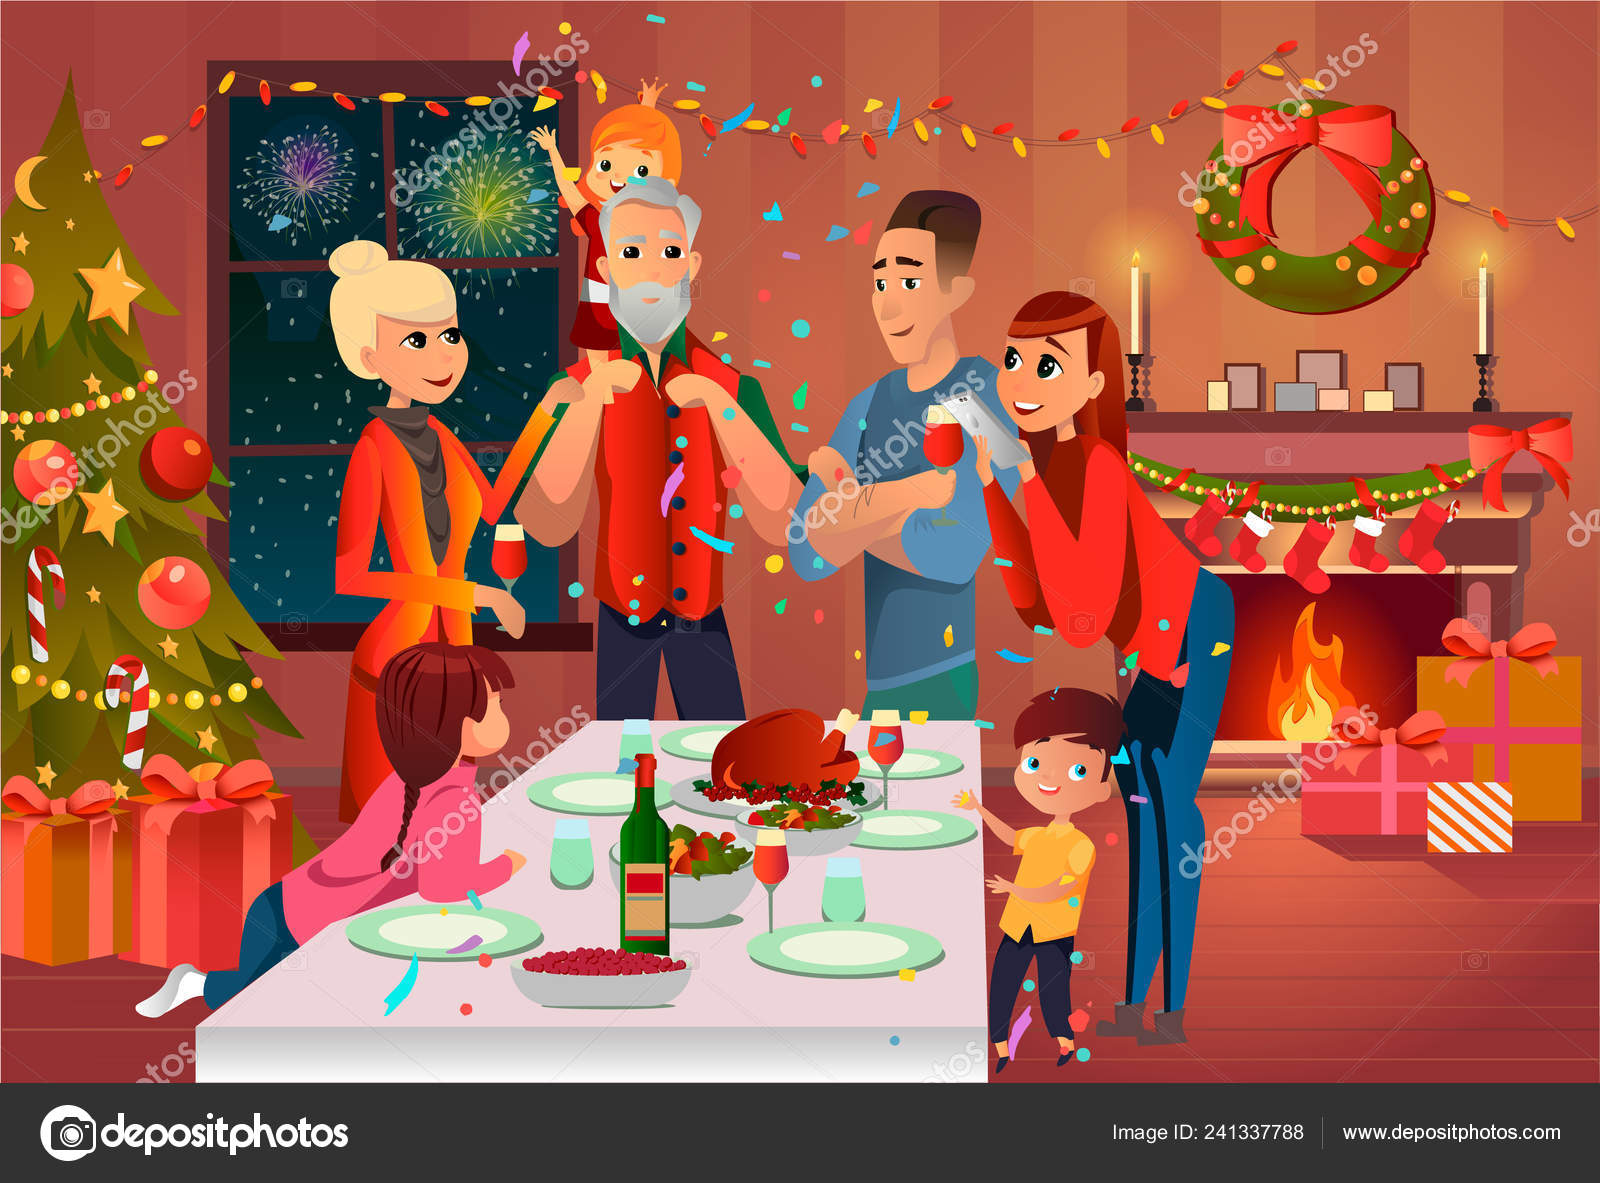 depositphotos_241337788-stock-illustration-happy-family-has-christmas-dinner.jpg